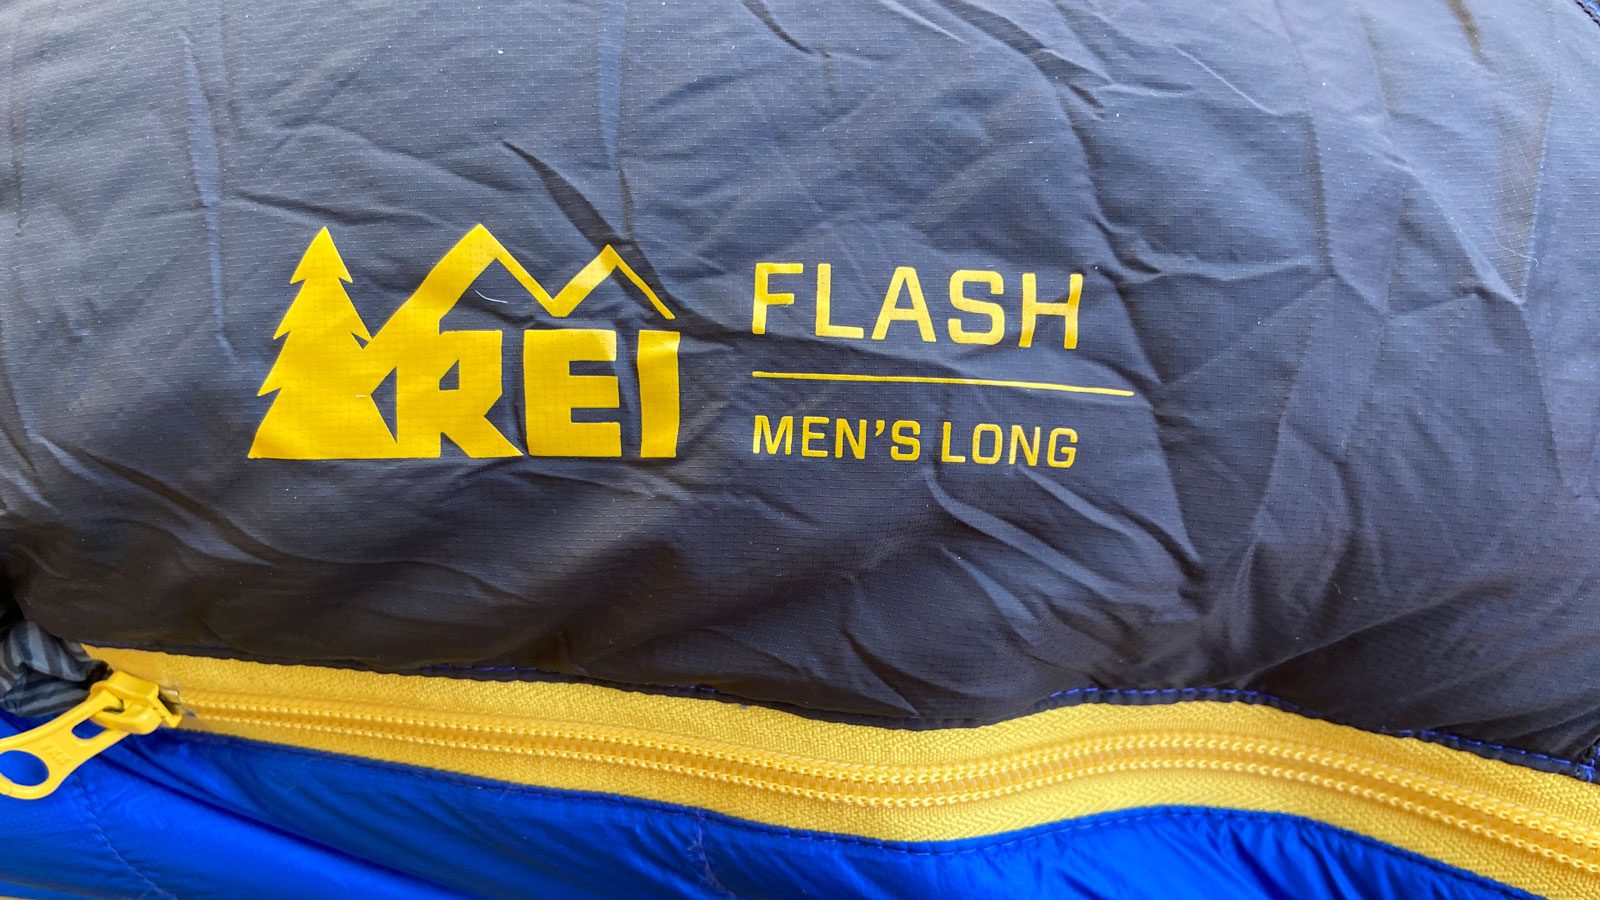 REI Flash Sleeping Bag Men's Long